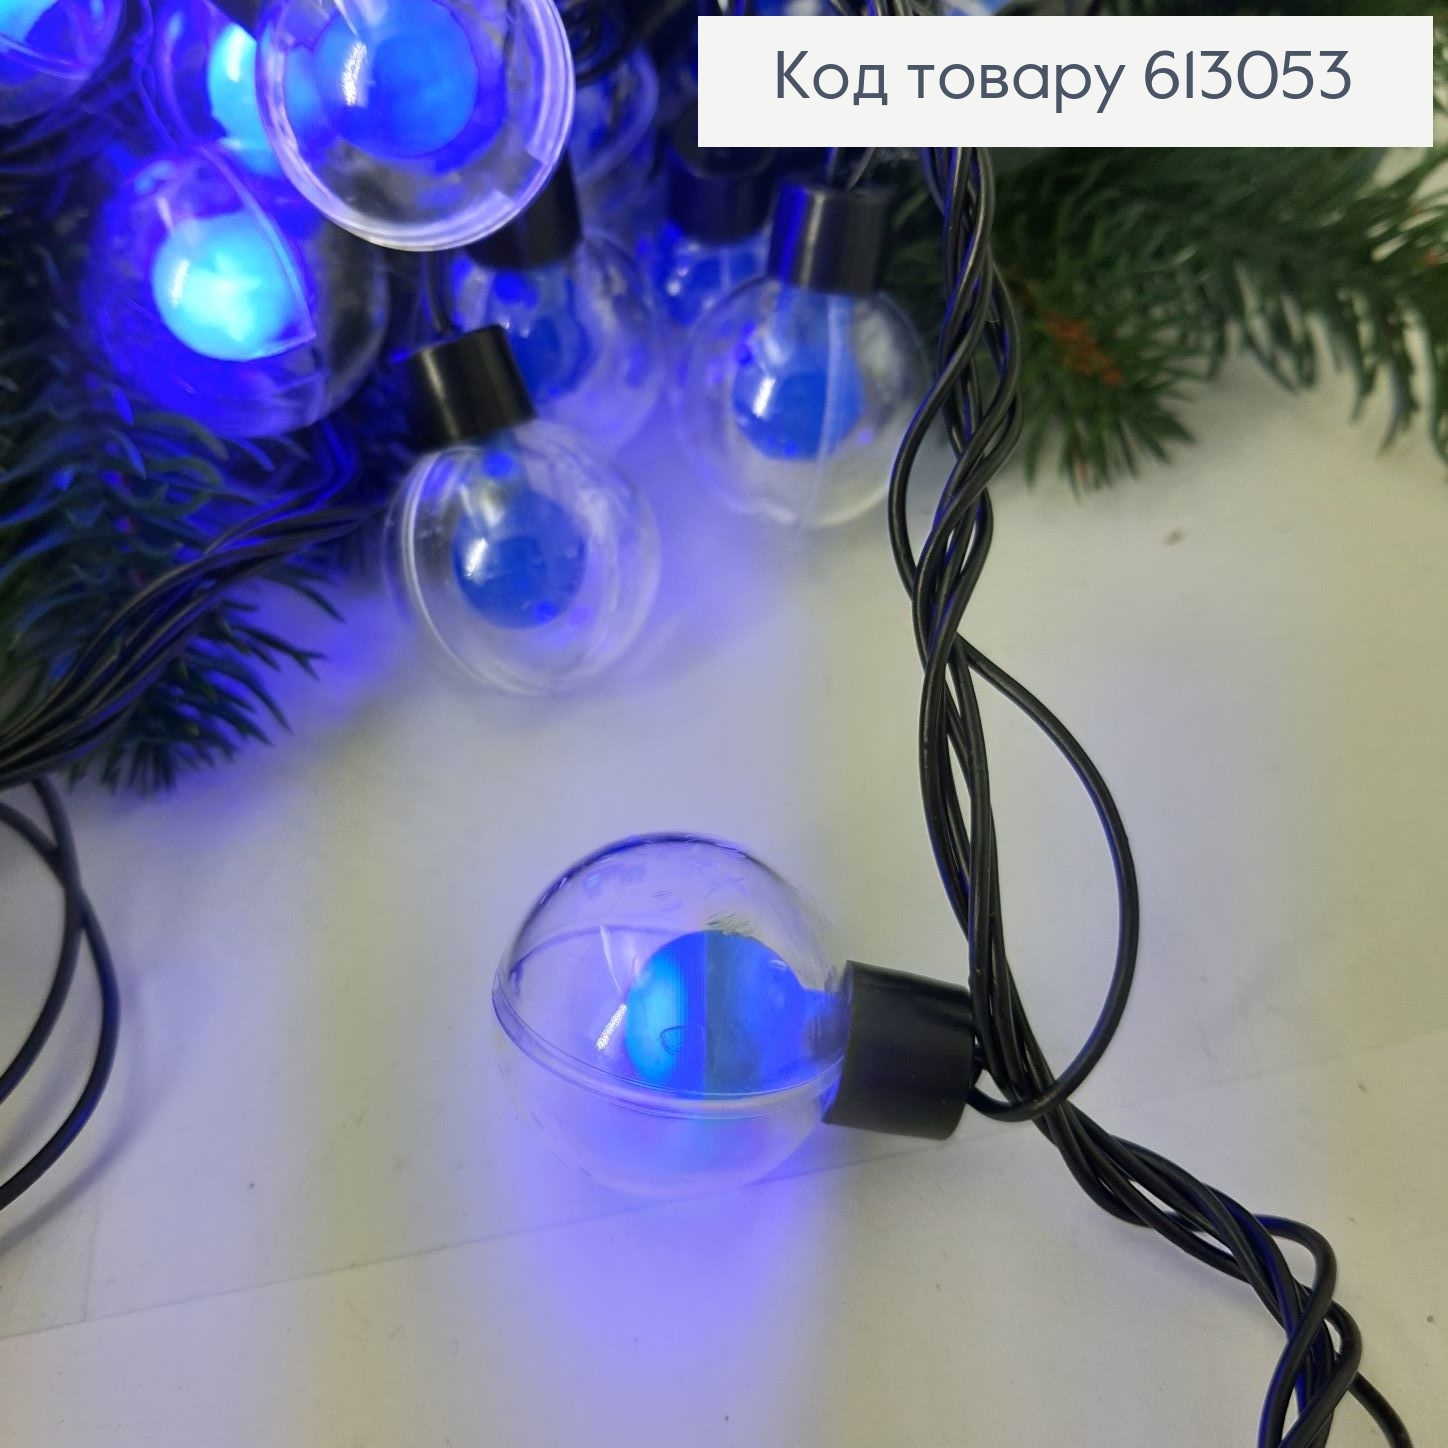 Гирлянда Шар в шаре 30 мм 5 м 20 LED синяя, (мигающая) 613053 фото 2